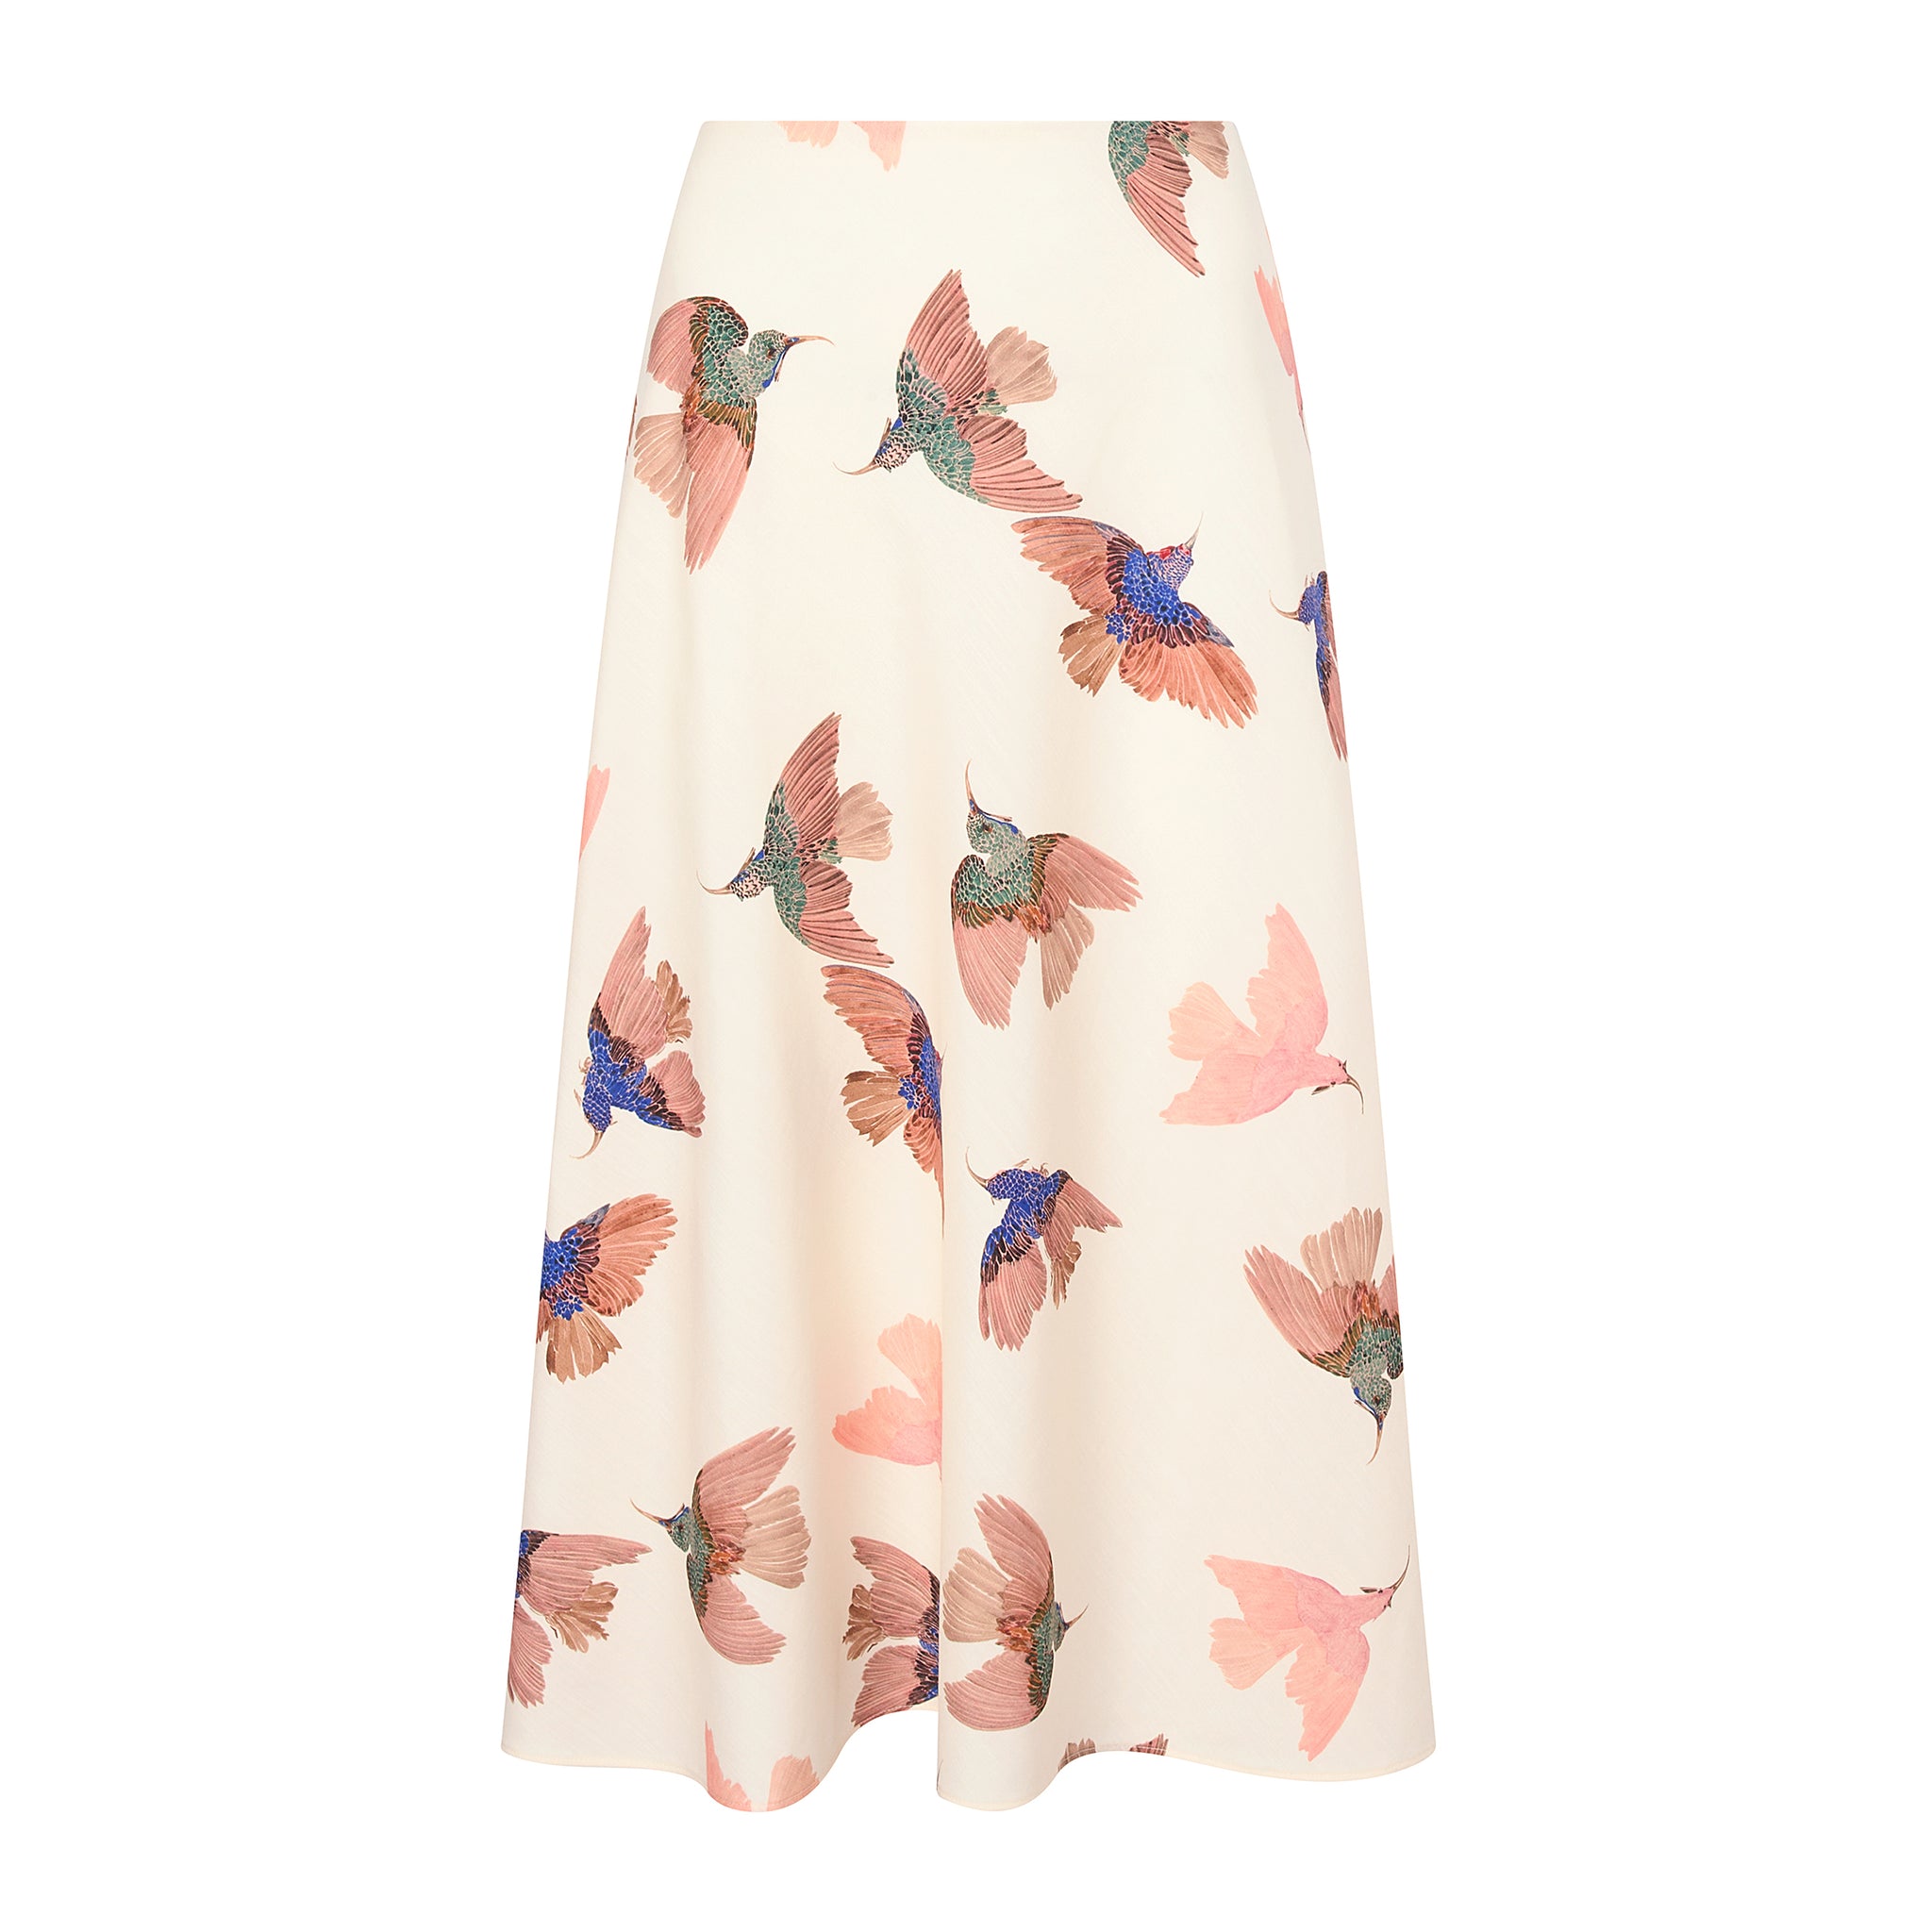 packshot image of the orchard skirt in hummingbird print